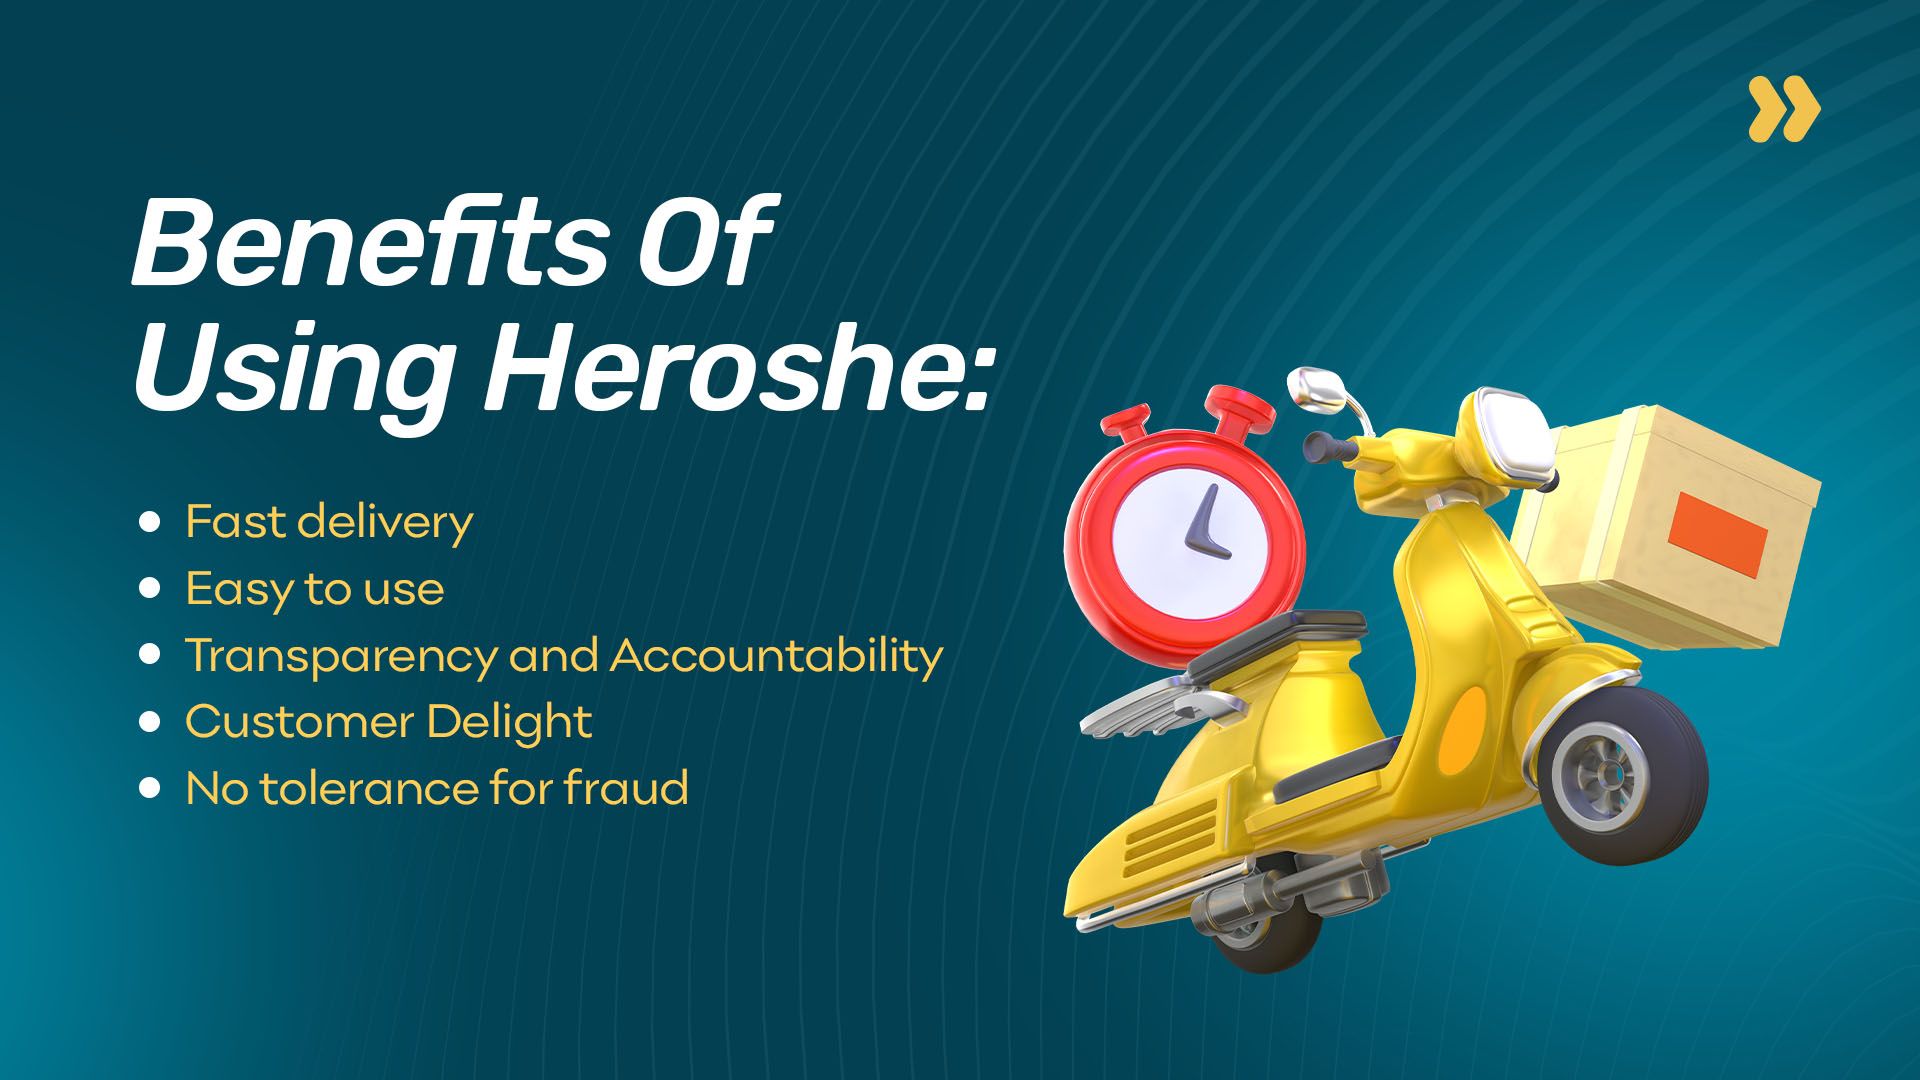 Benefits of using Heroshe